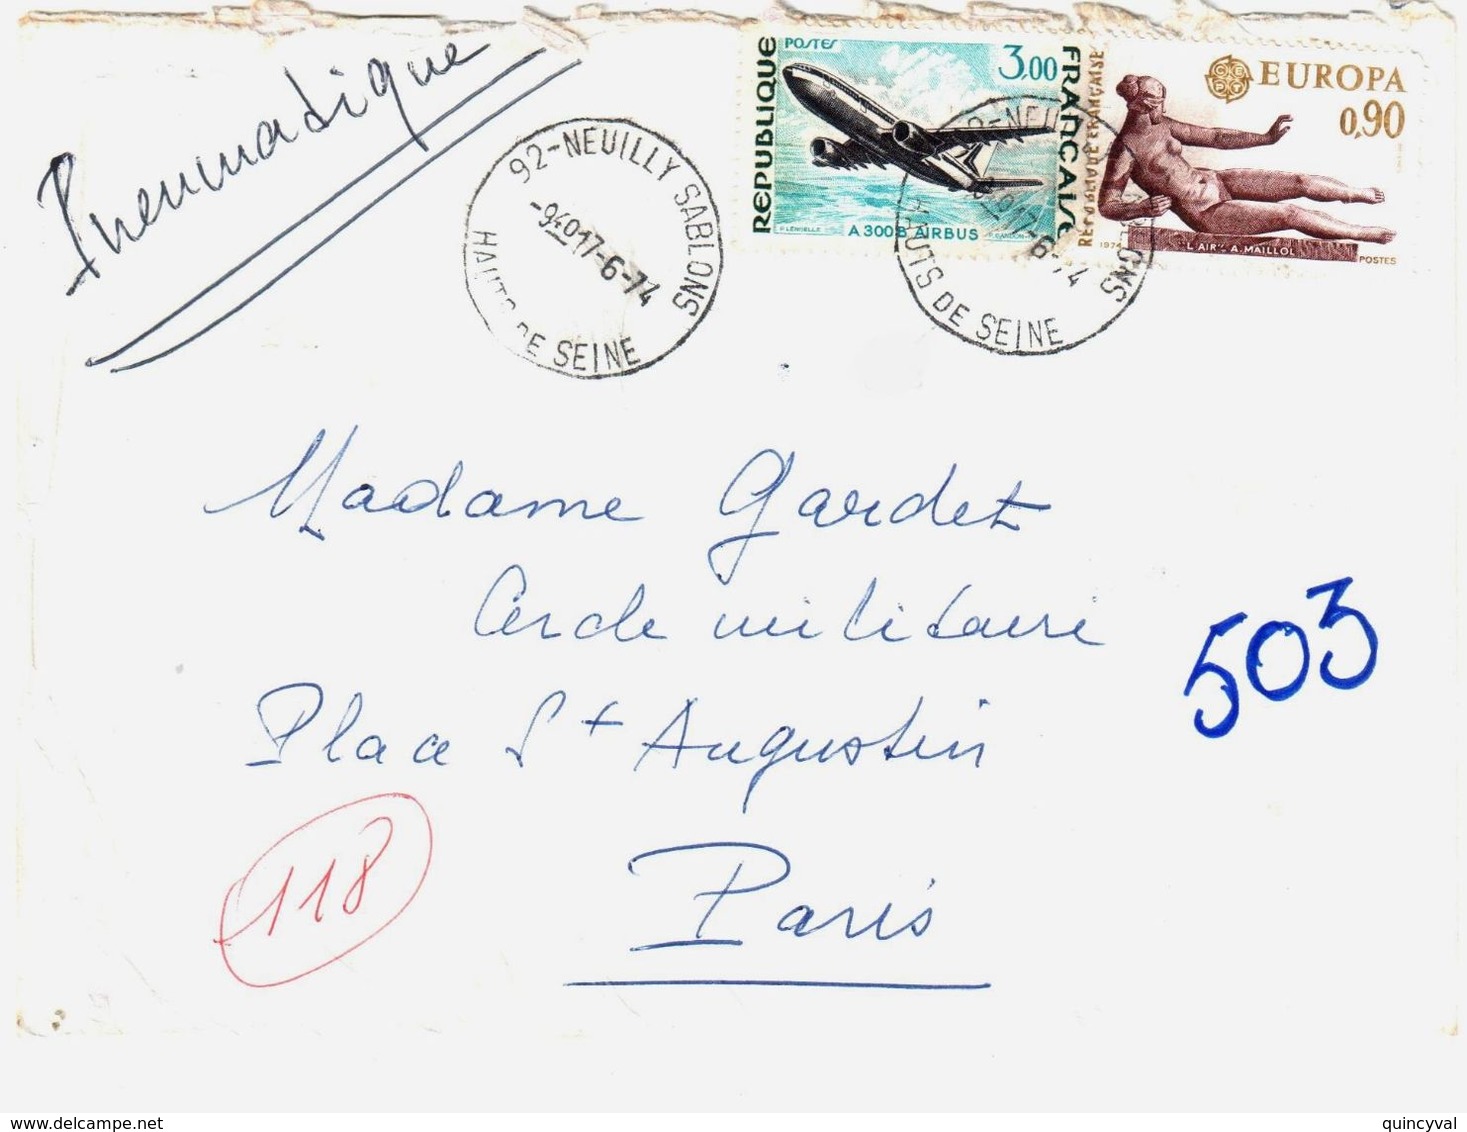 NEUILLY SABLONS Hauts De Seine Pneumatique Paris 118 Via Neuilly Ppal 3 F Airbus 90c Europa Yv 1750 1790 Ob 17 6 1974 - Lettres & Documents